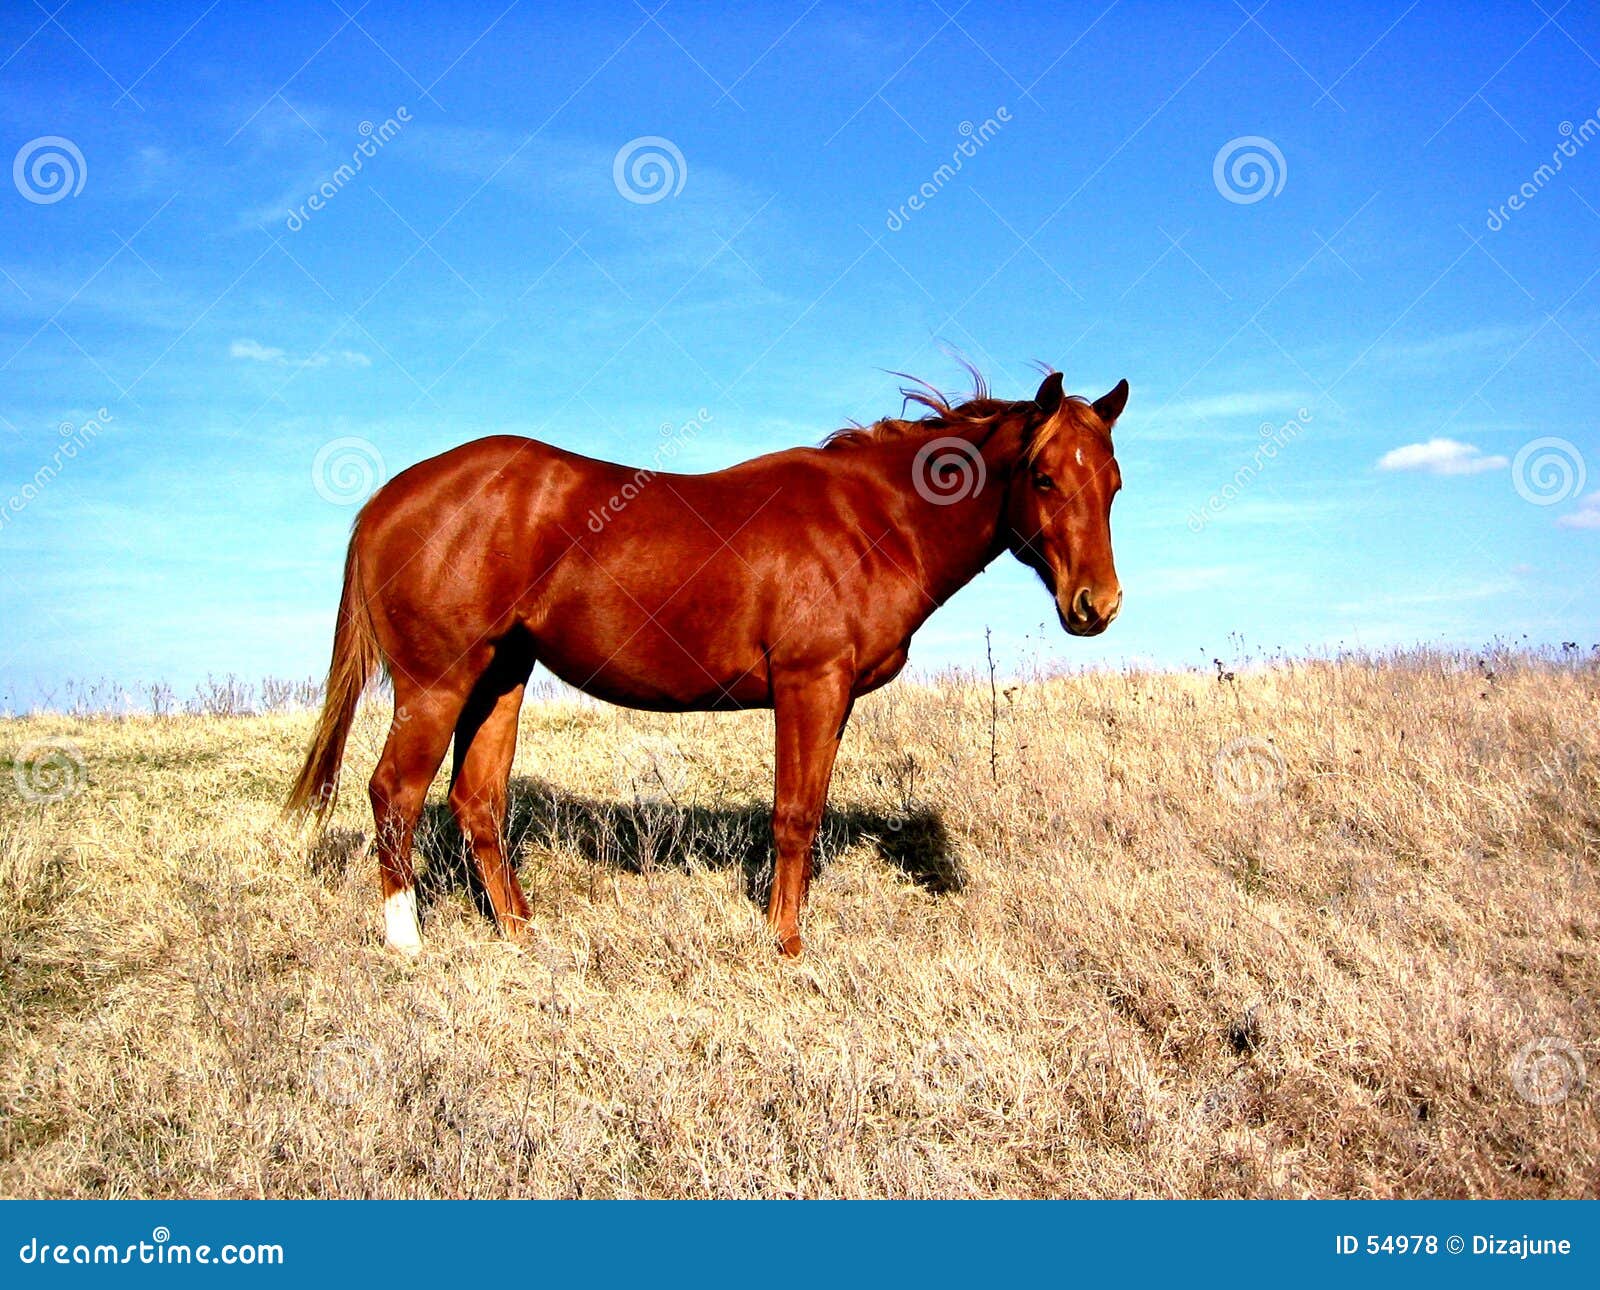 horse on hilltop